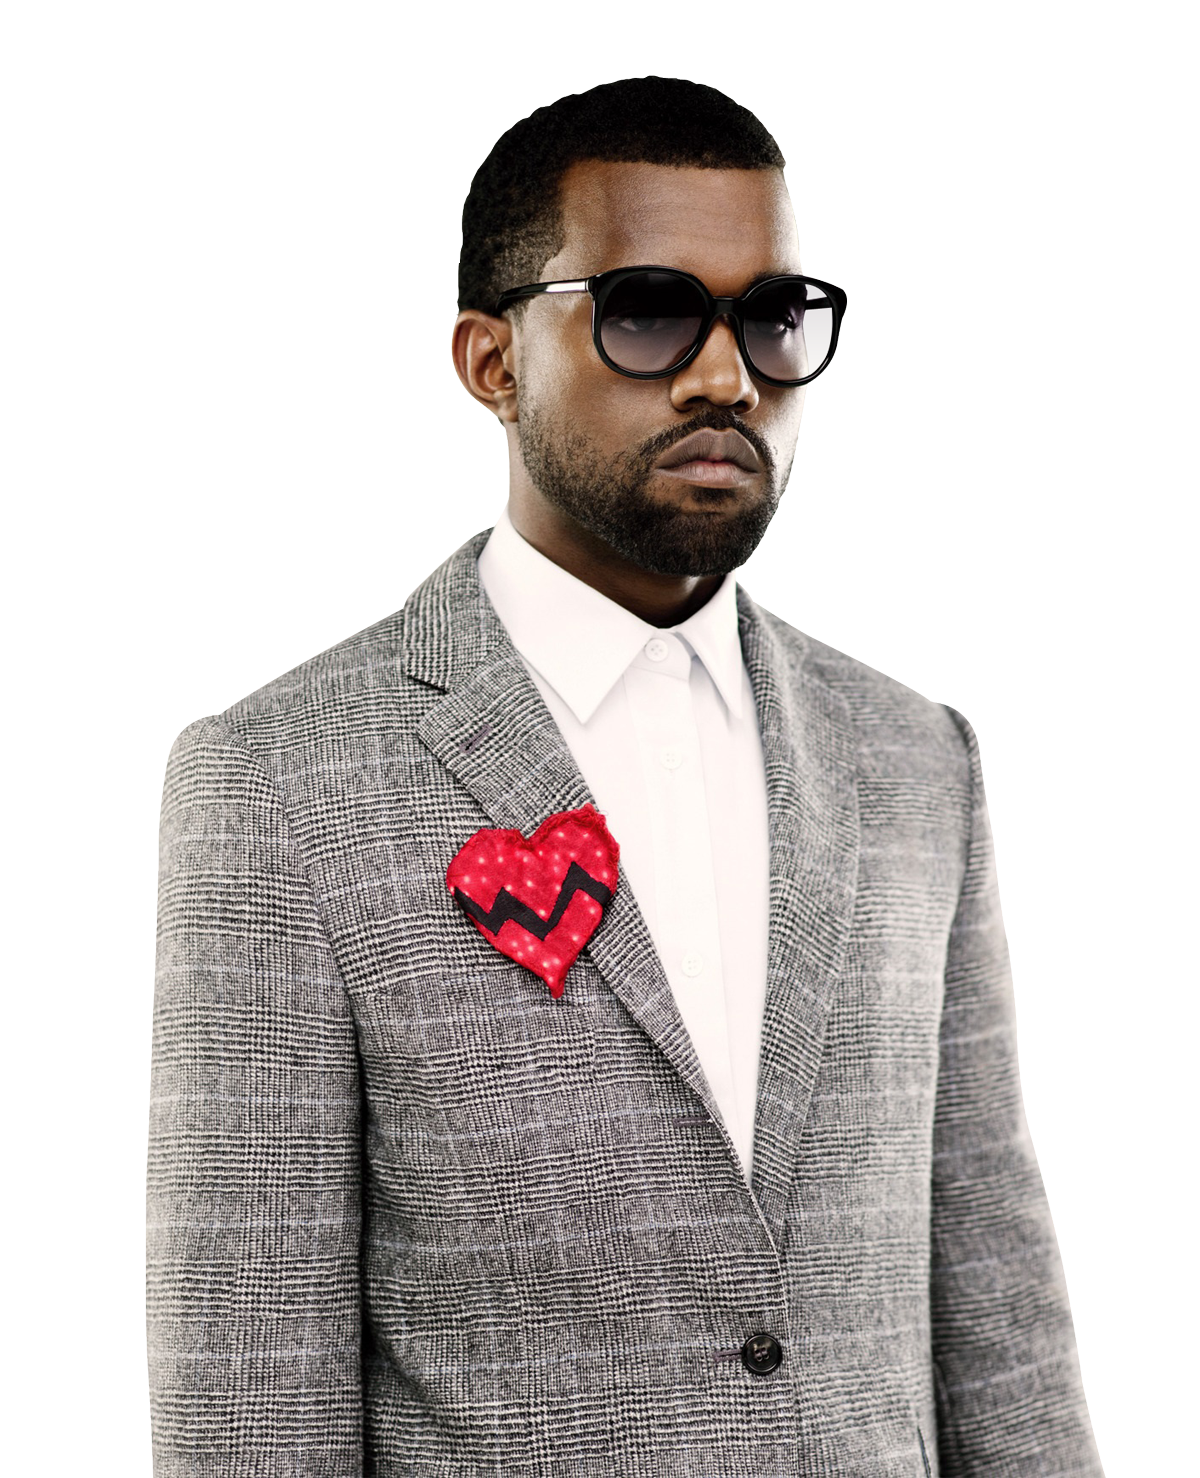 Kanye West Free HQ Image PNG Image